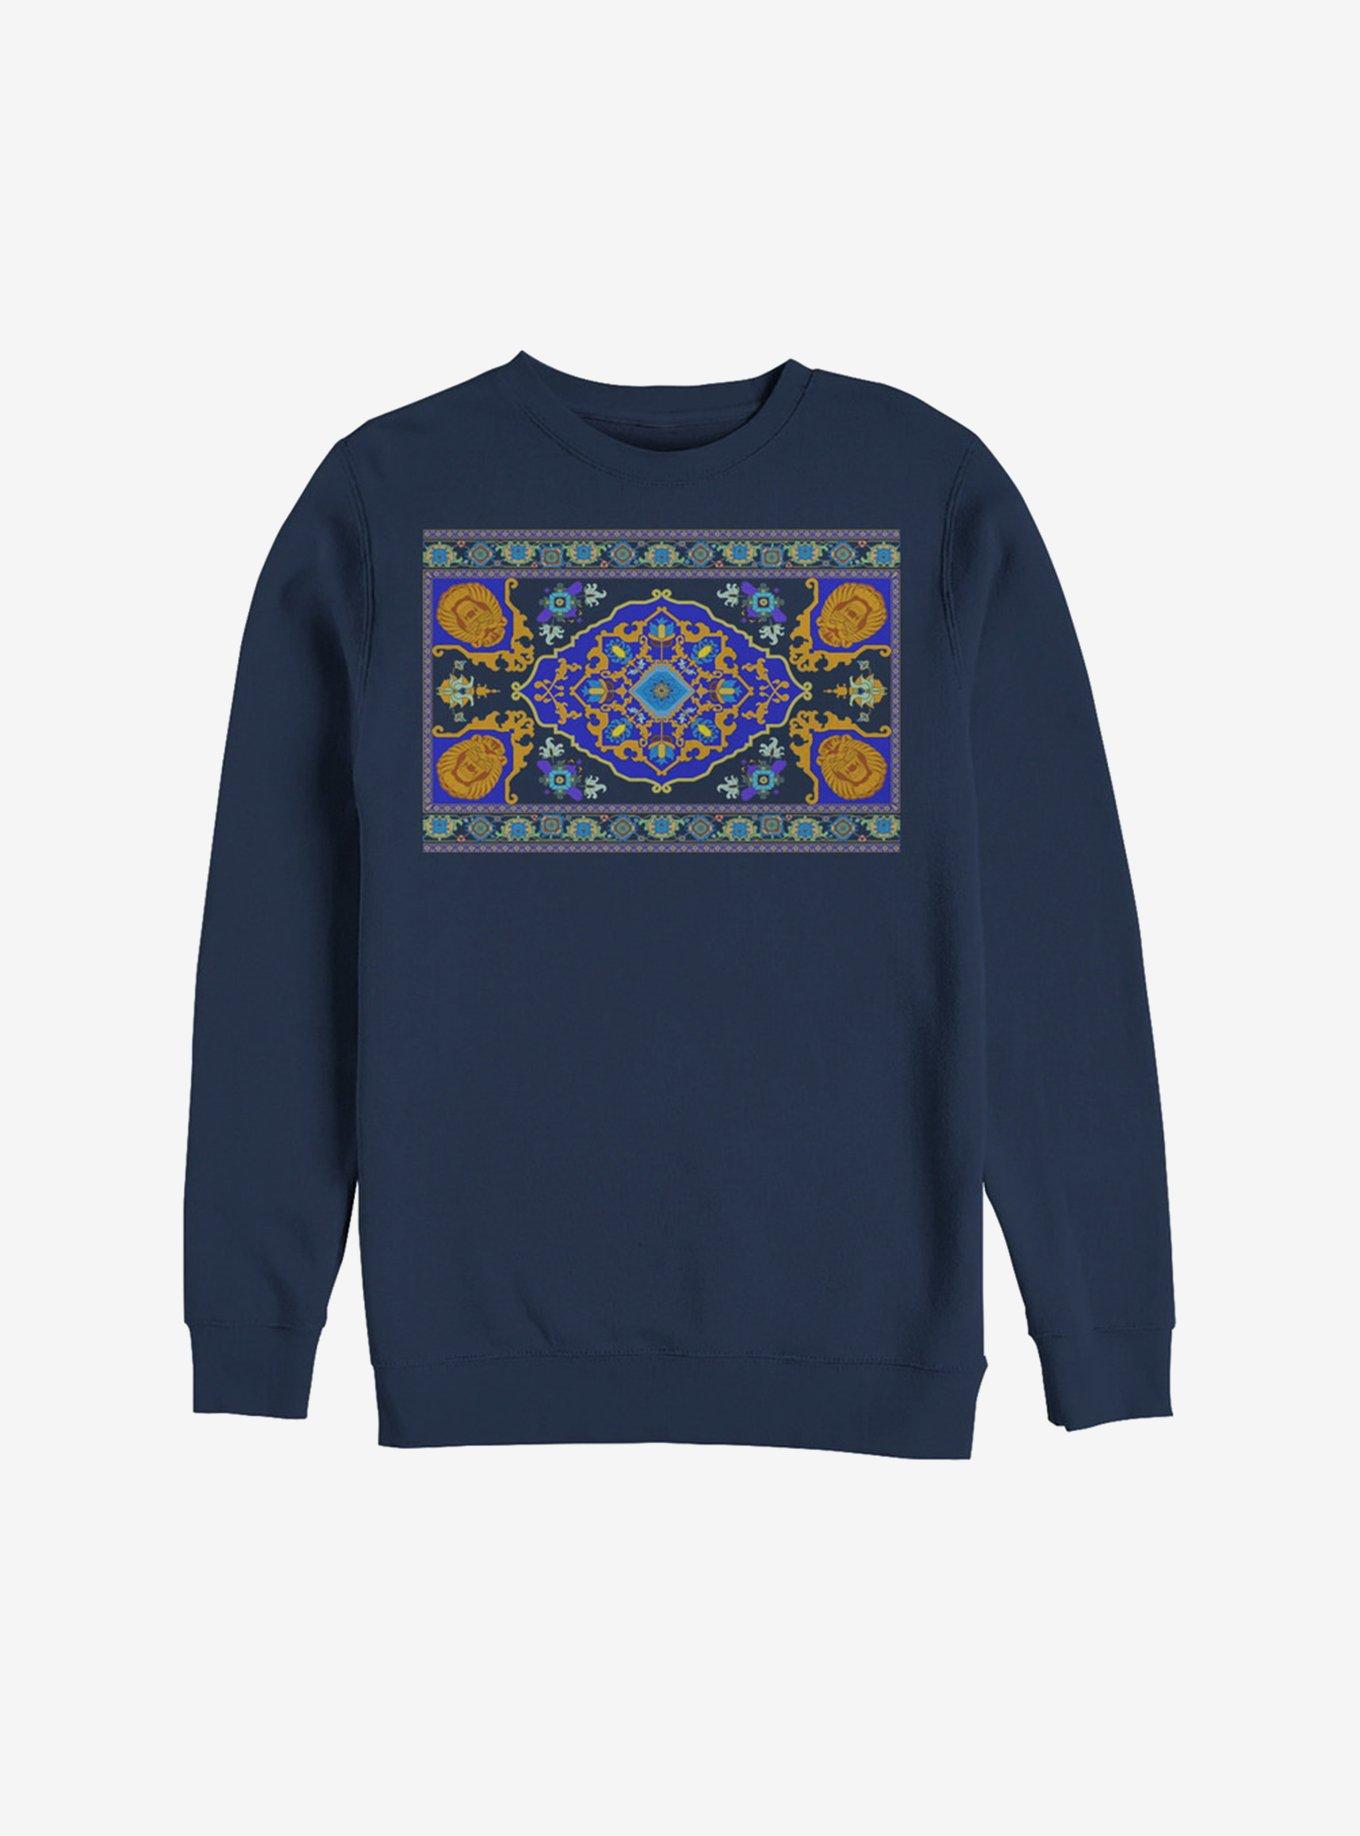 Disney Aladdin 2019 Magic Carpet Panel Print Sweatshirt, NAVY, hi-res